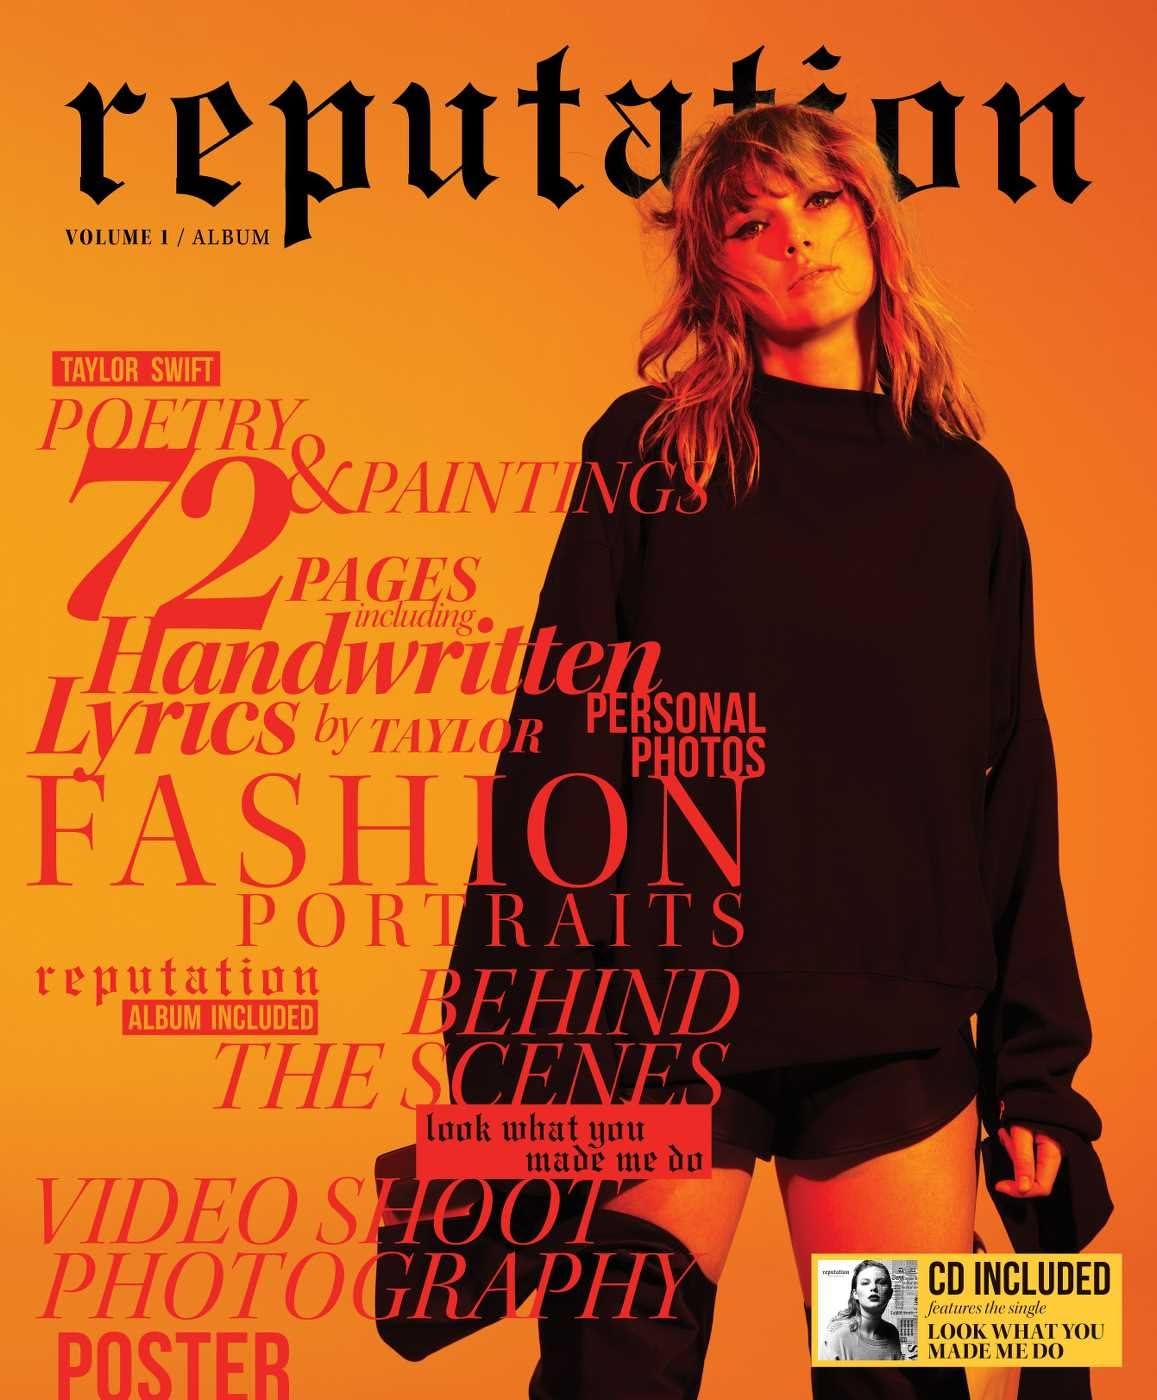 Swift, Taylor/Reputation Volume 1 (Magazine with CD)